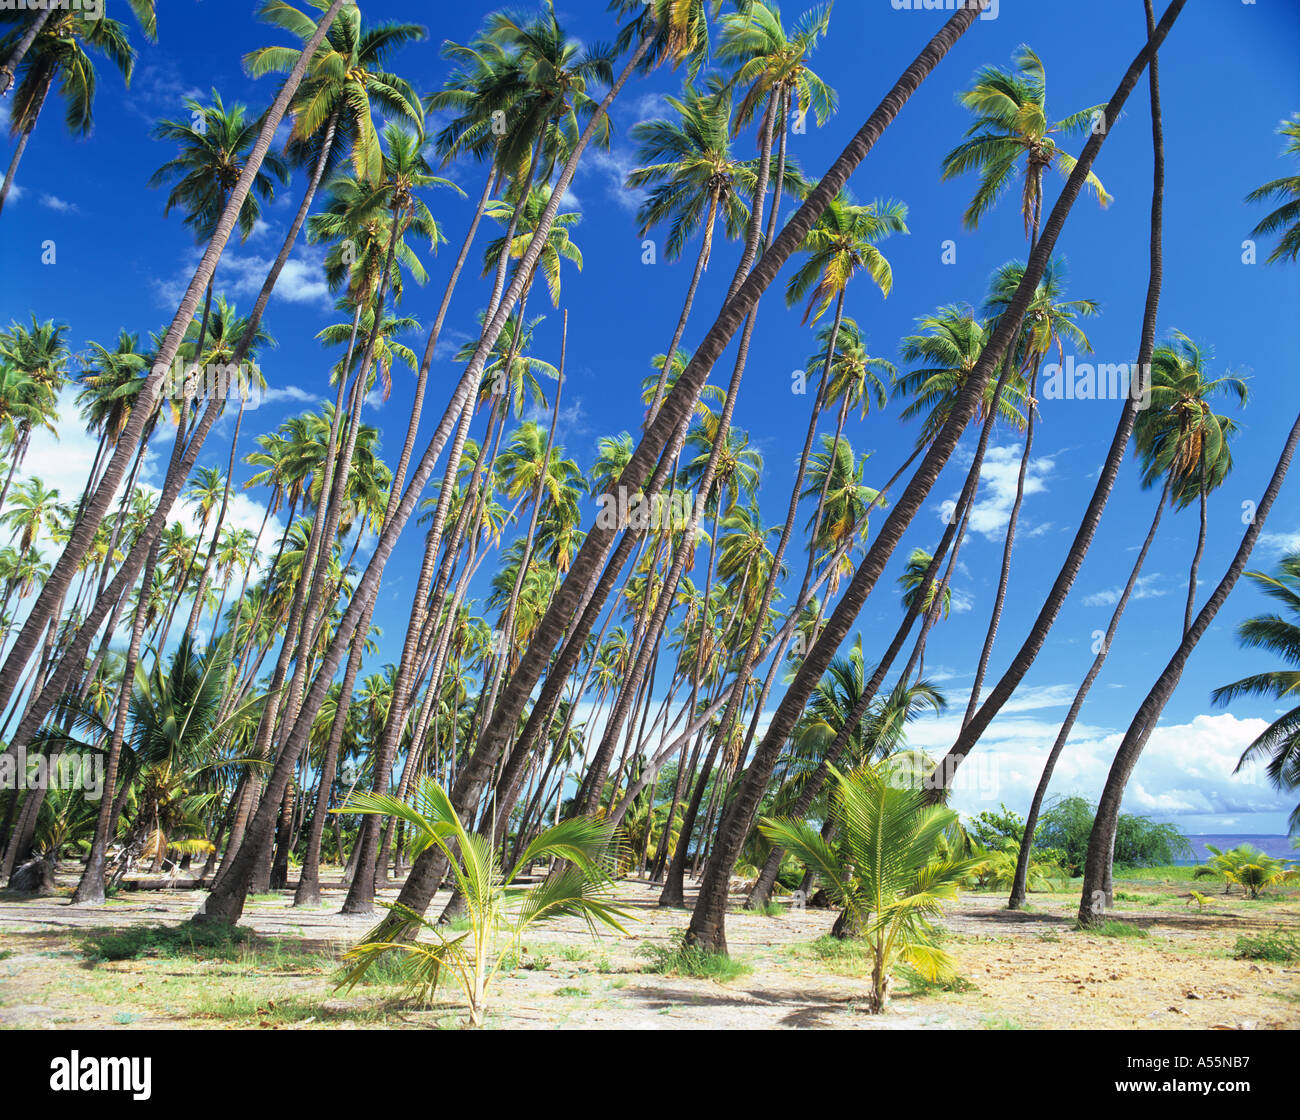 The ancient Kapuaiwa Coconut Grove on Molokai Island Hawaii, USA has ...